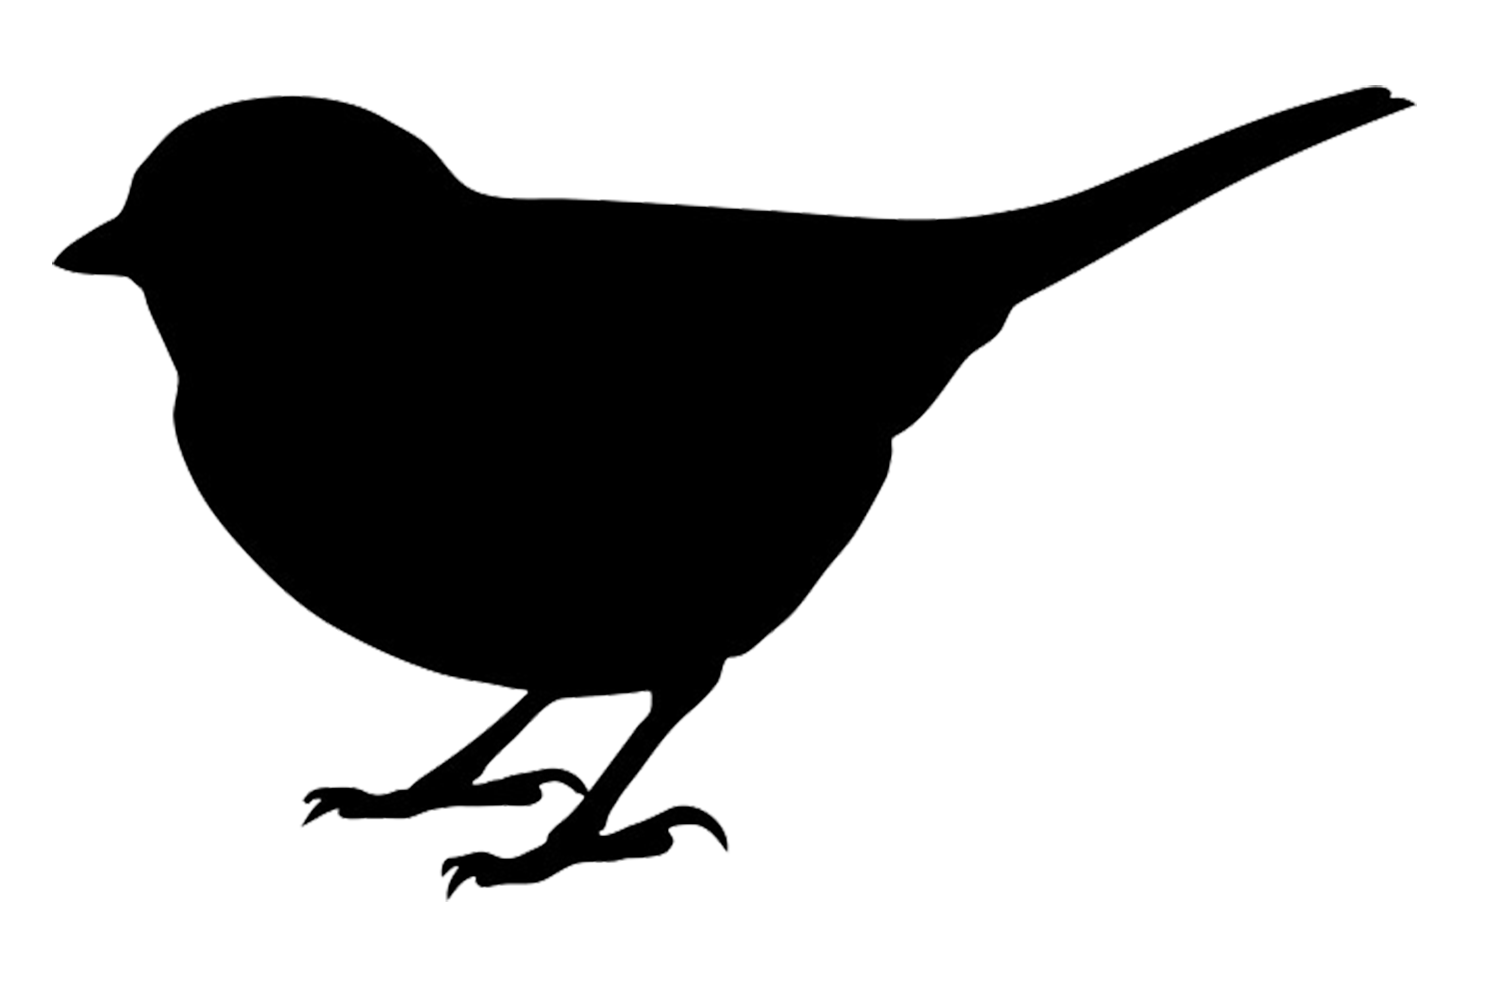 Clipart bird silhouette